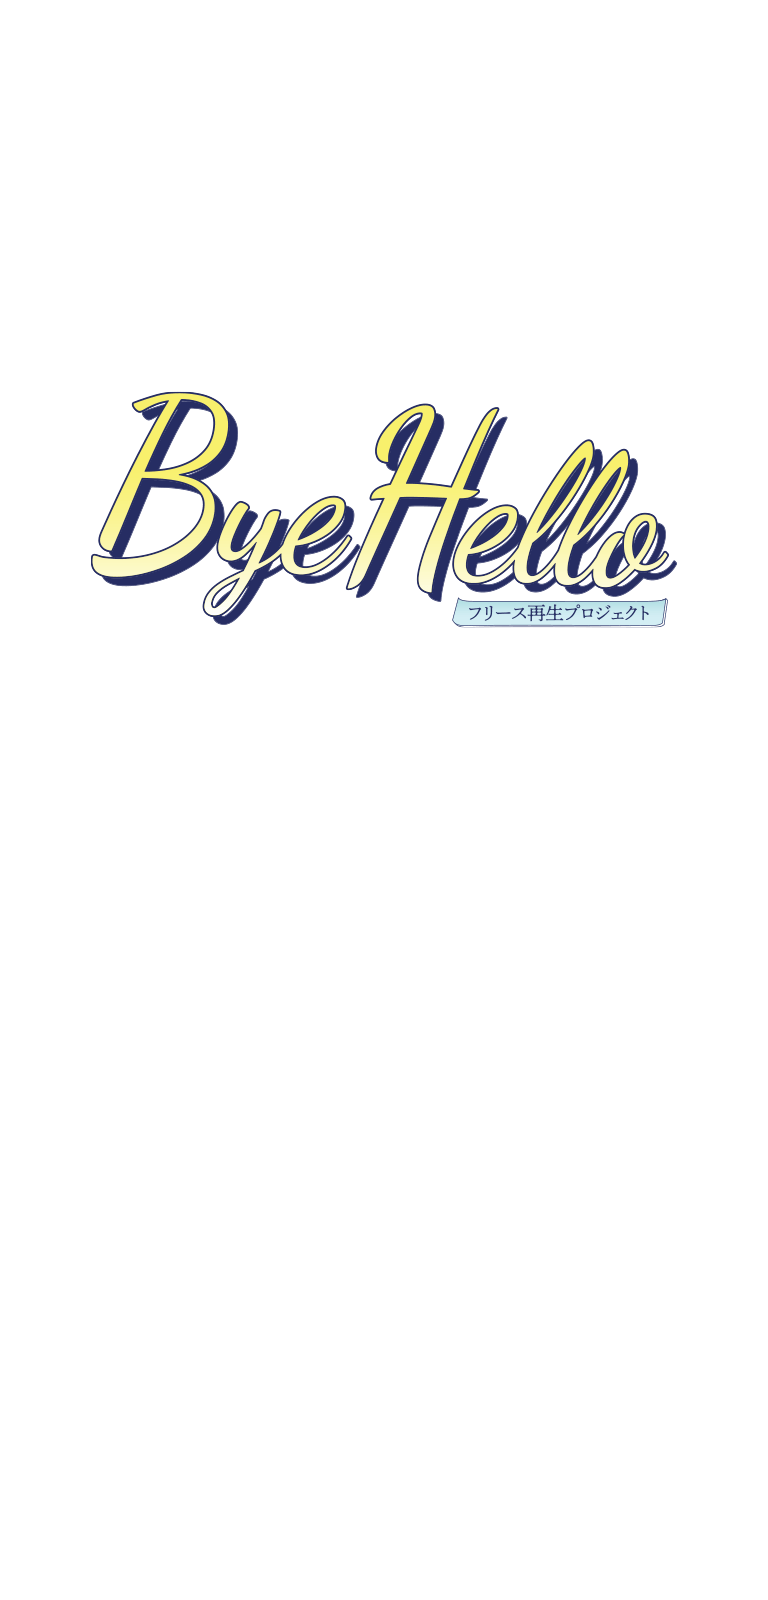 ByeHello フリース再生プロジェクト